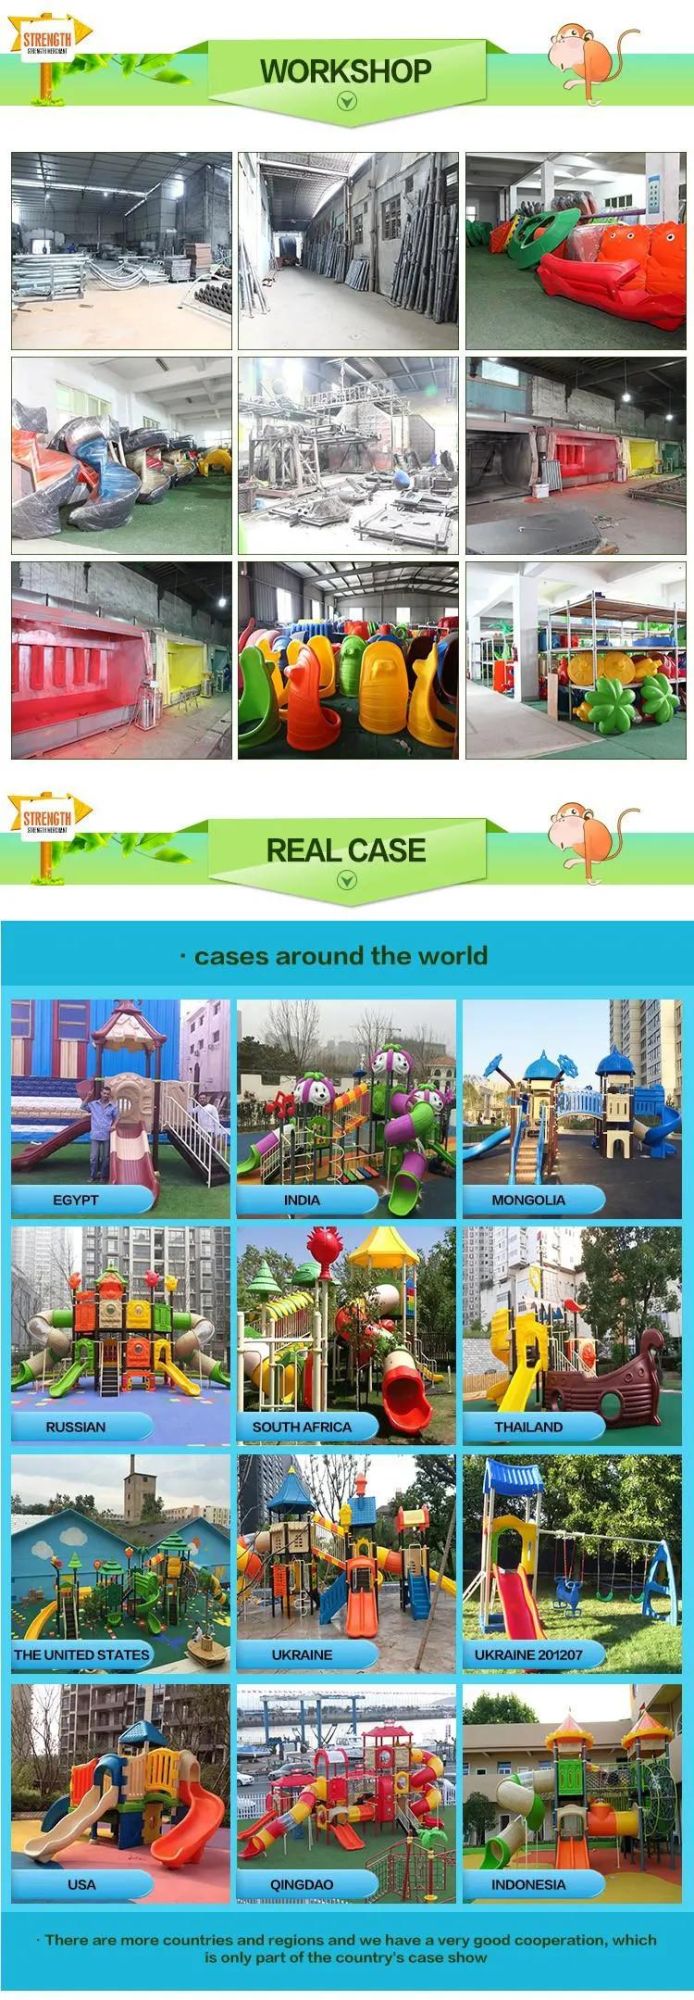 Custom Amusement Park High Quality Outdoor Water Slide Playground